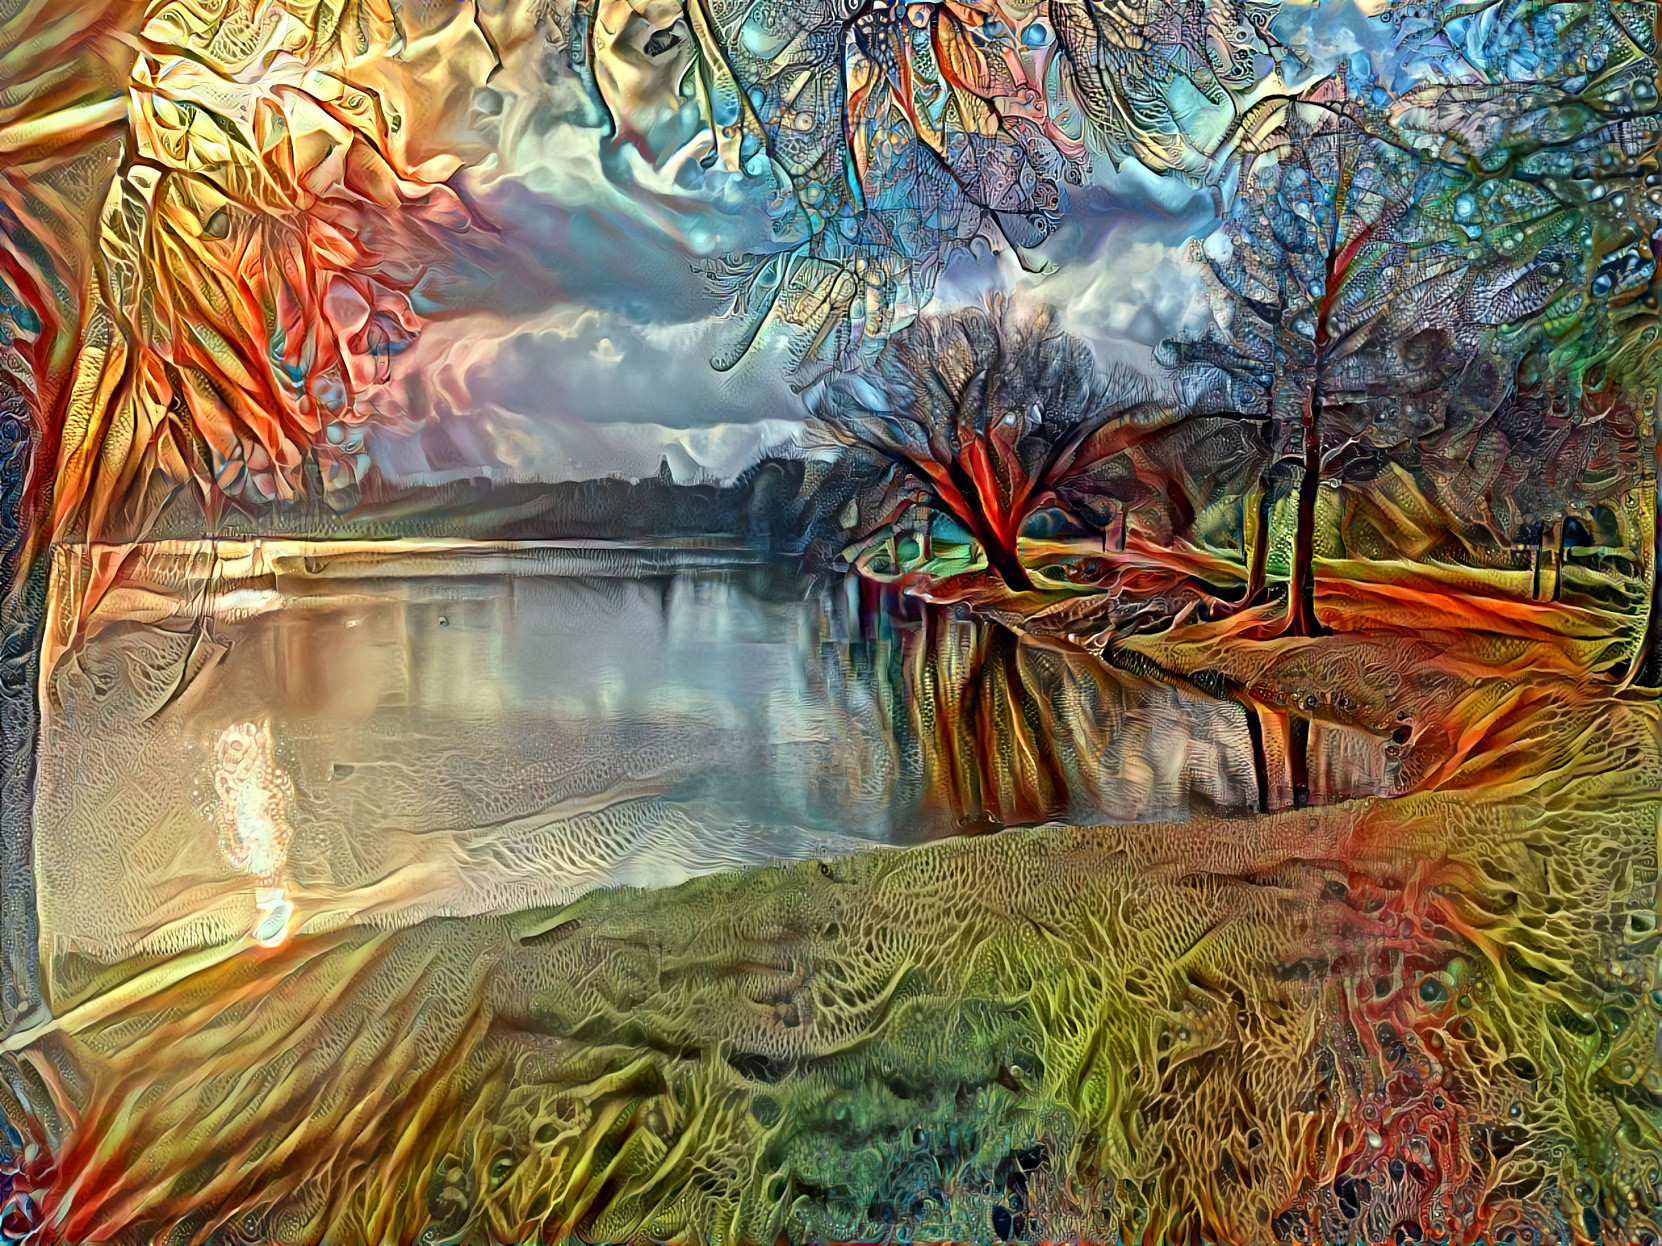 Glass edge lake with fractal lawn